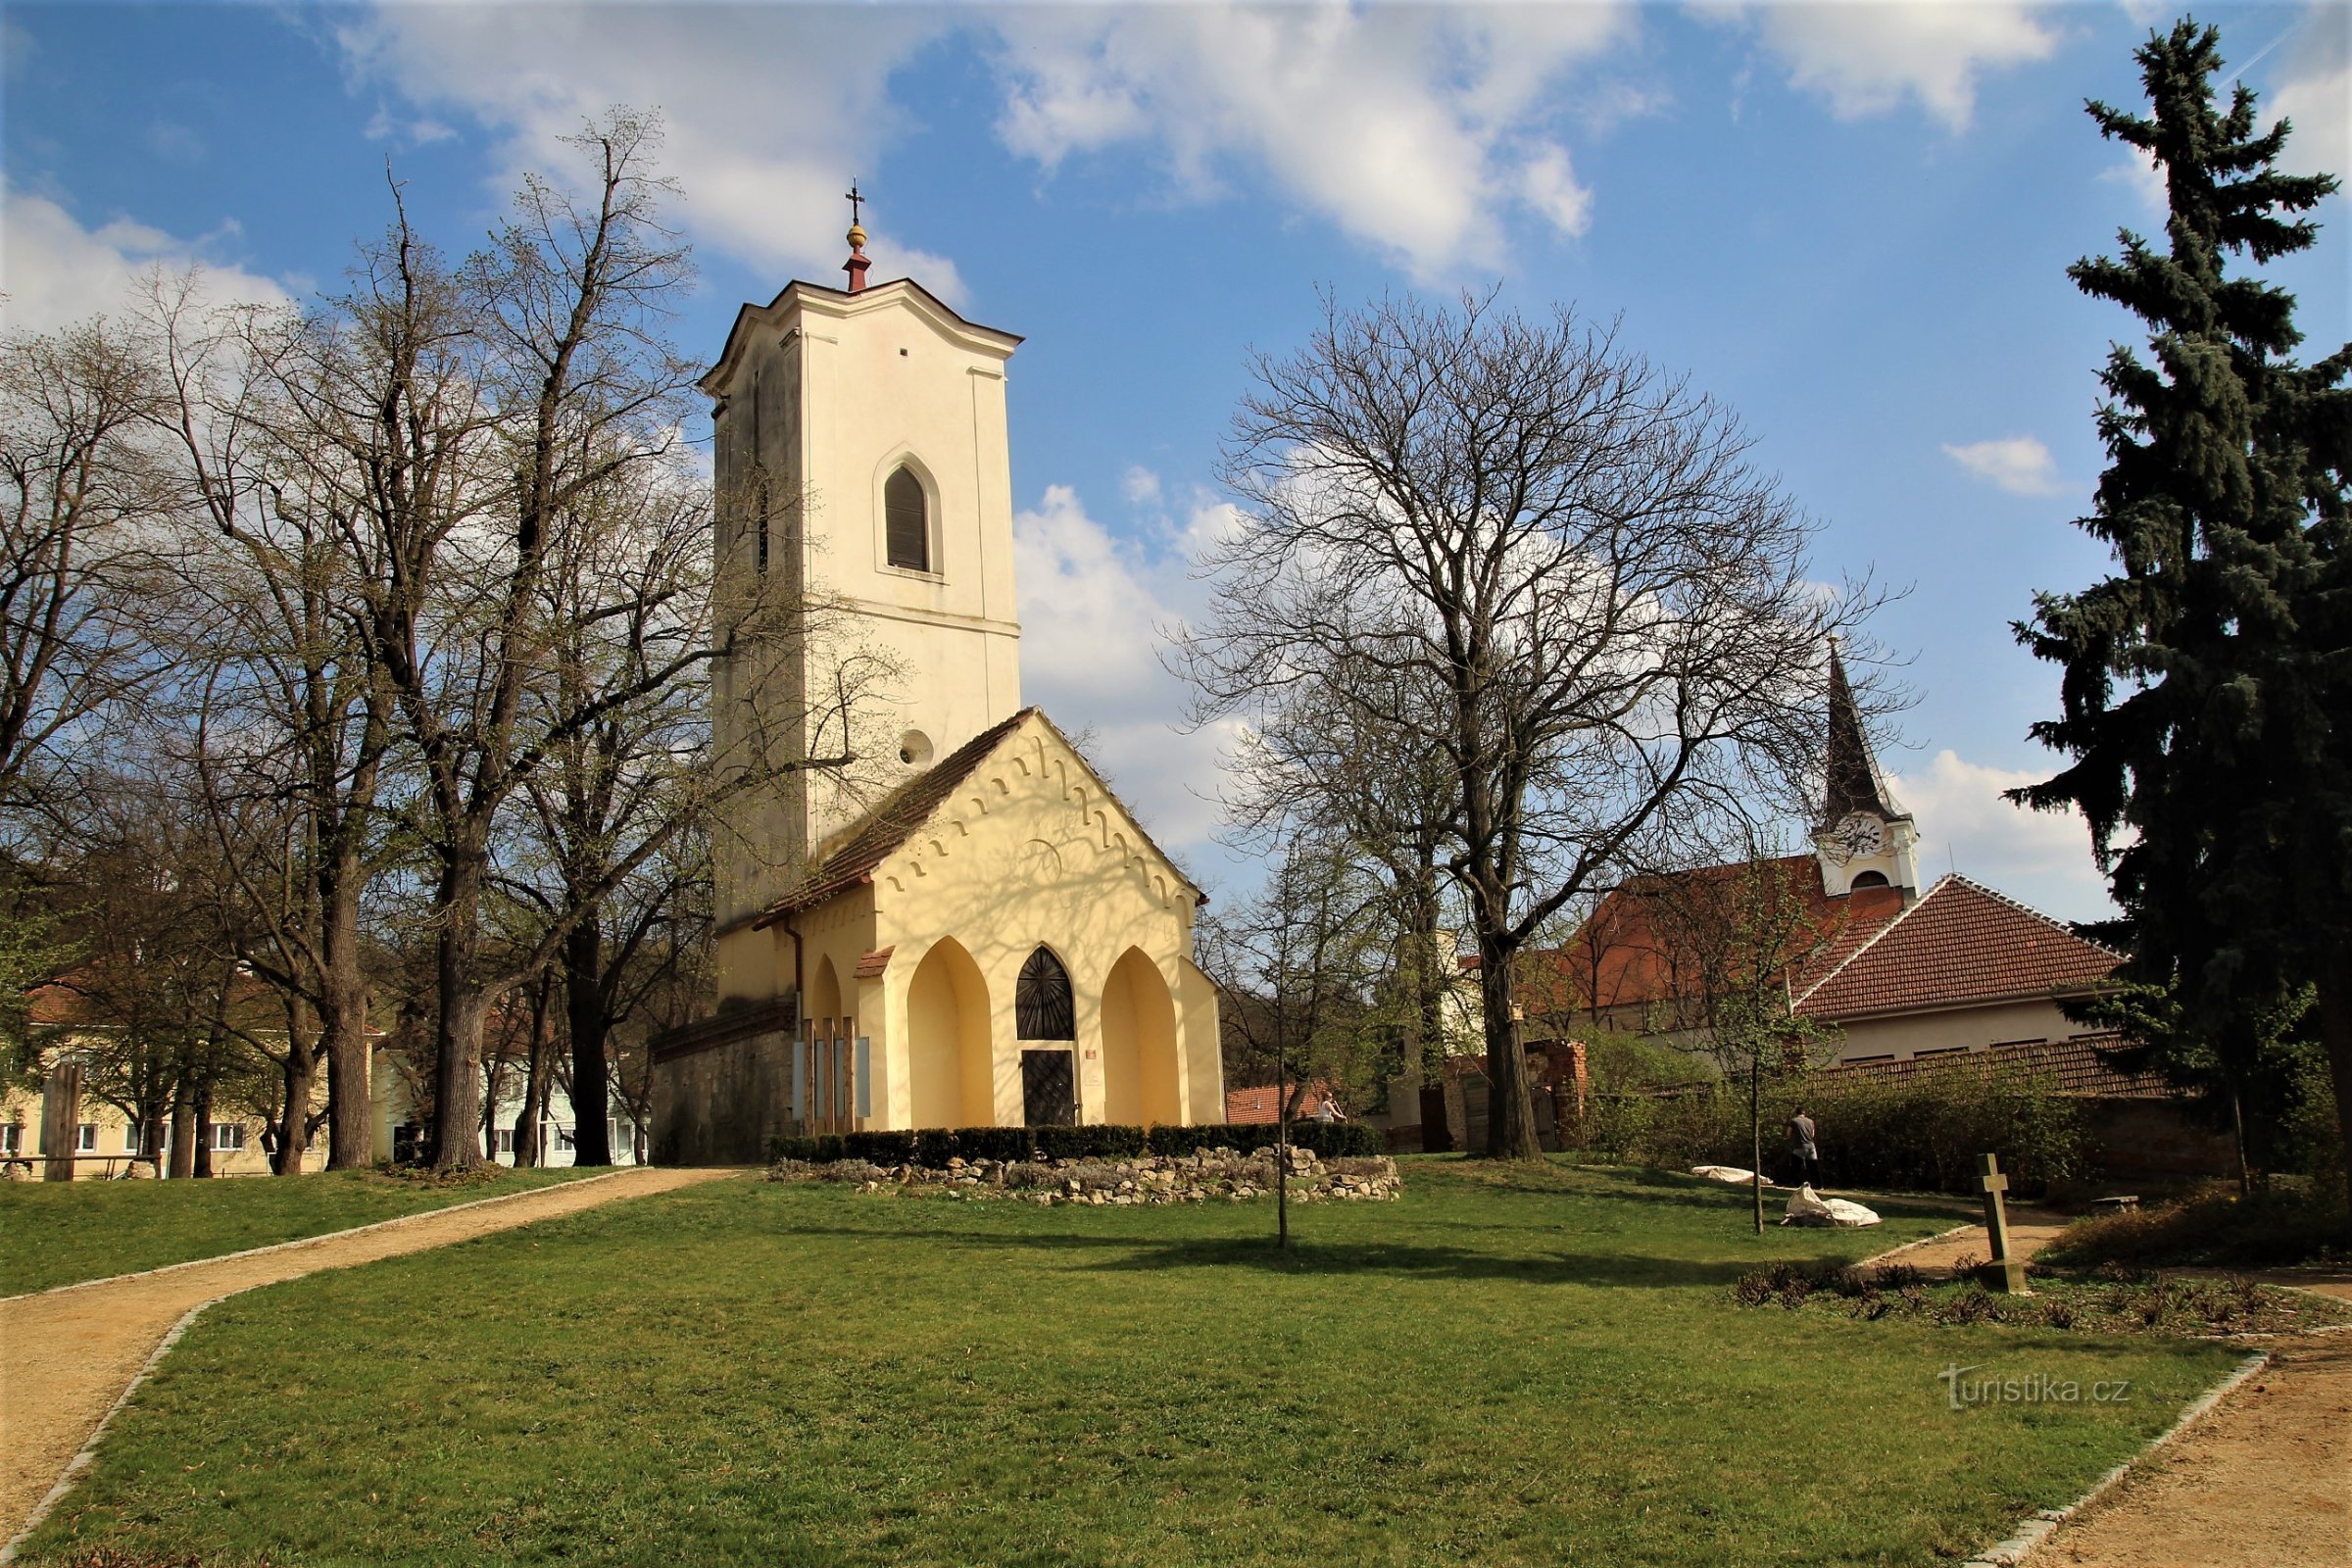 Židlochovice - 2017 年的 Zvonice